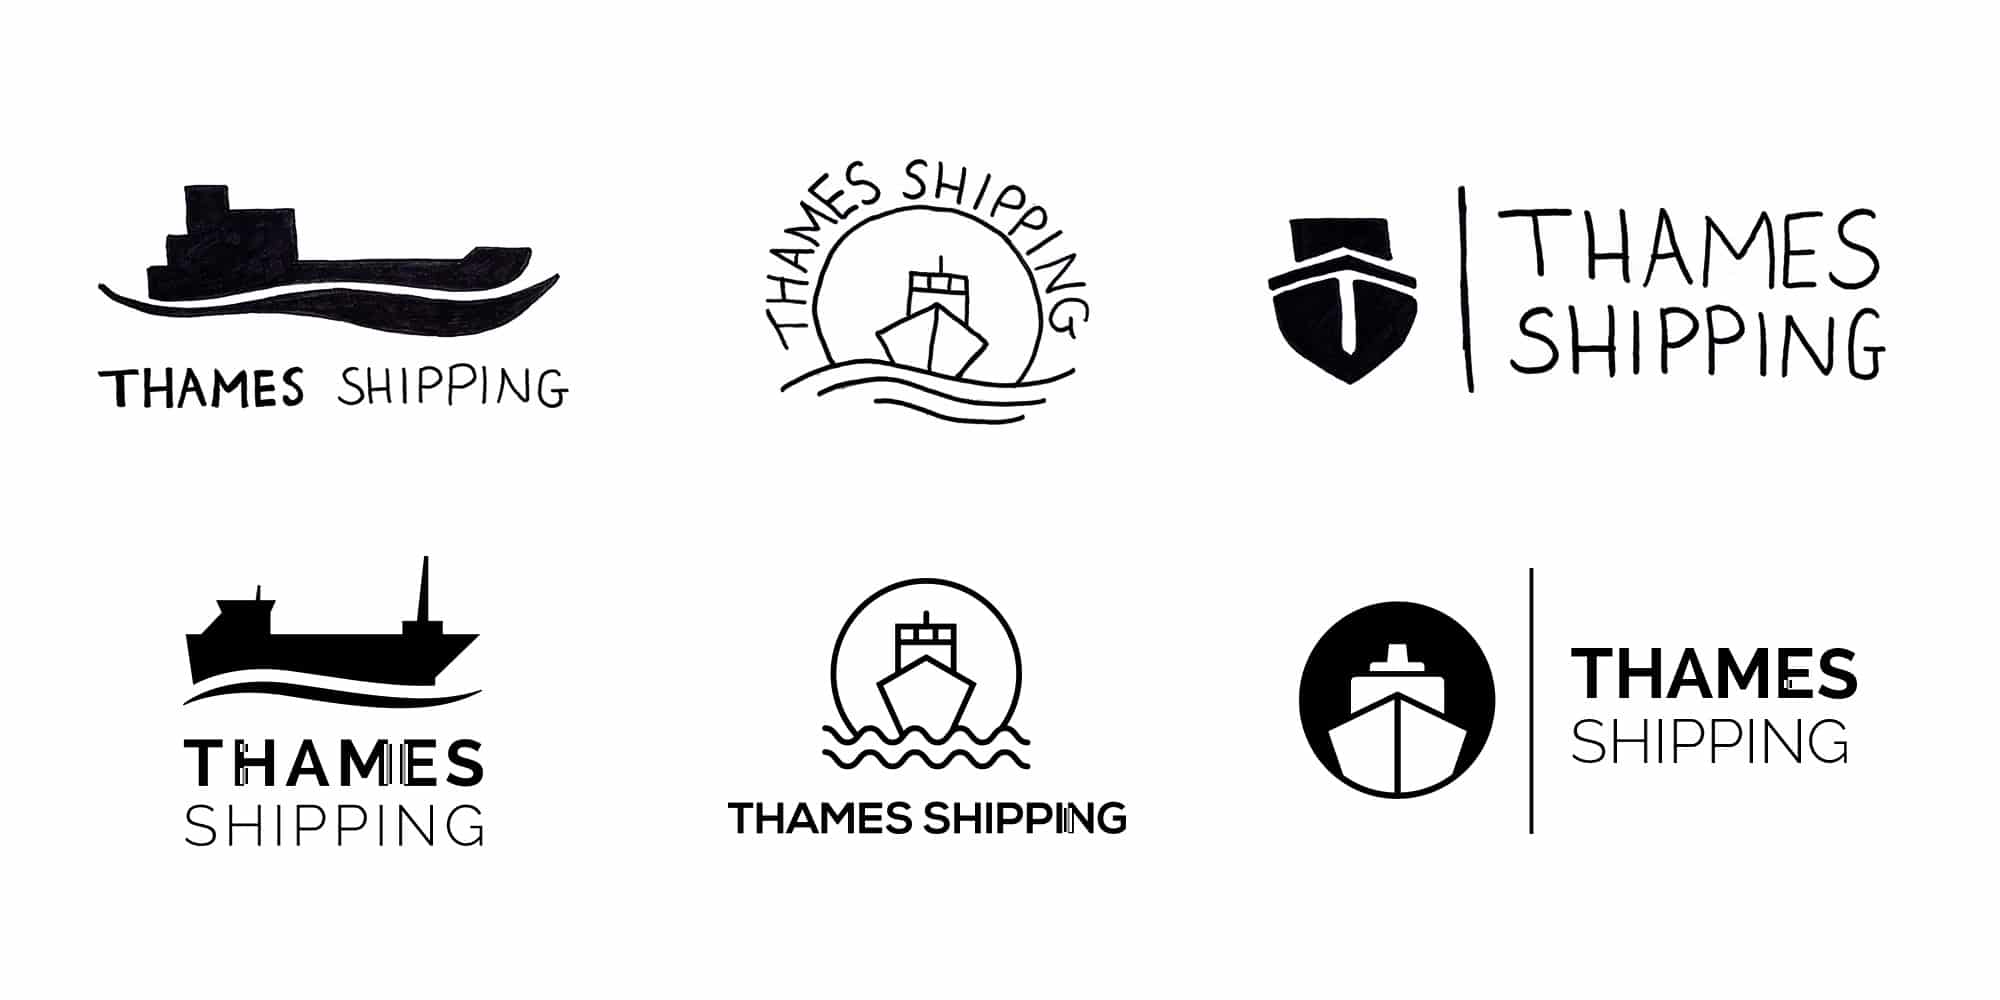 Shipping Company Rebrand Thames Shipping Concepts